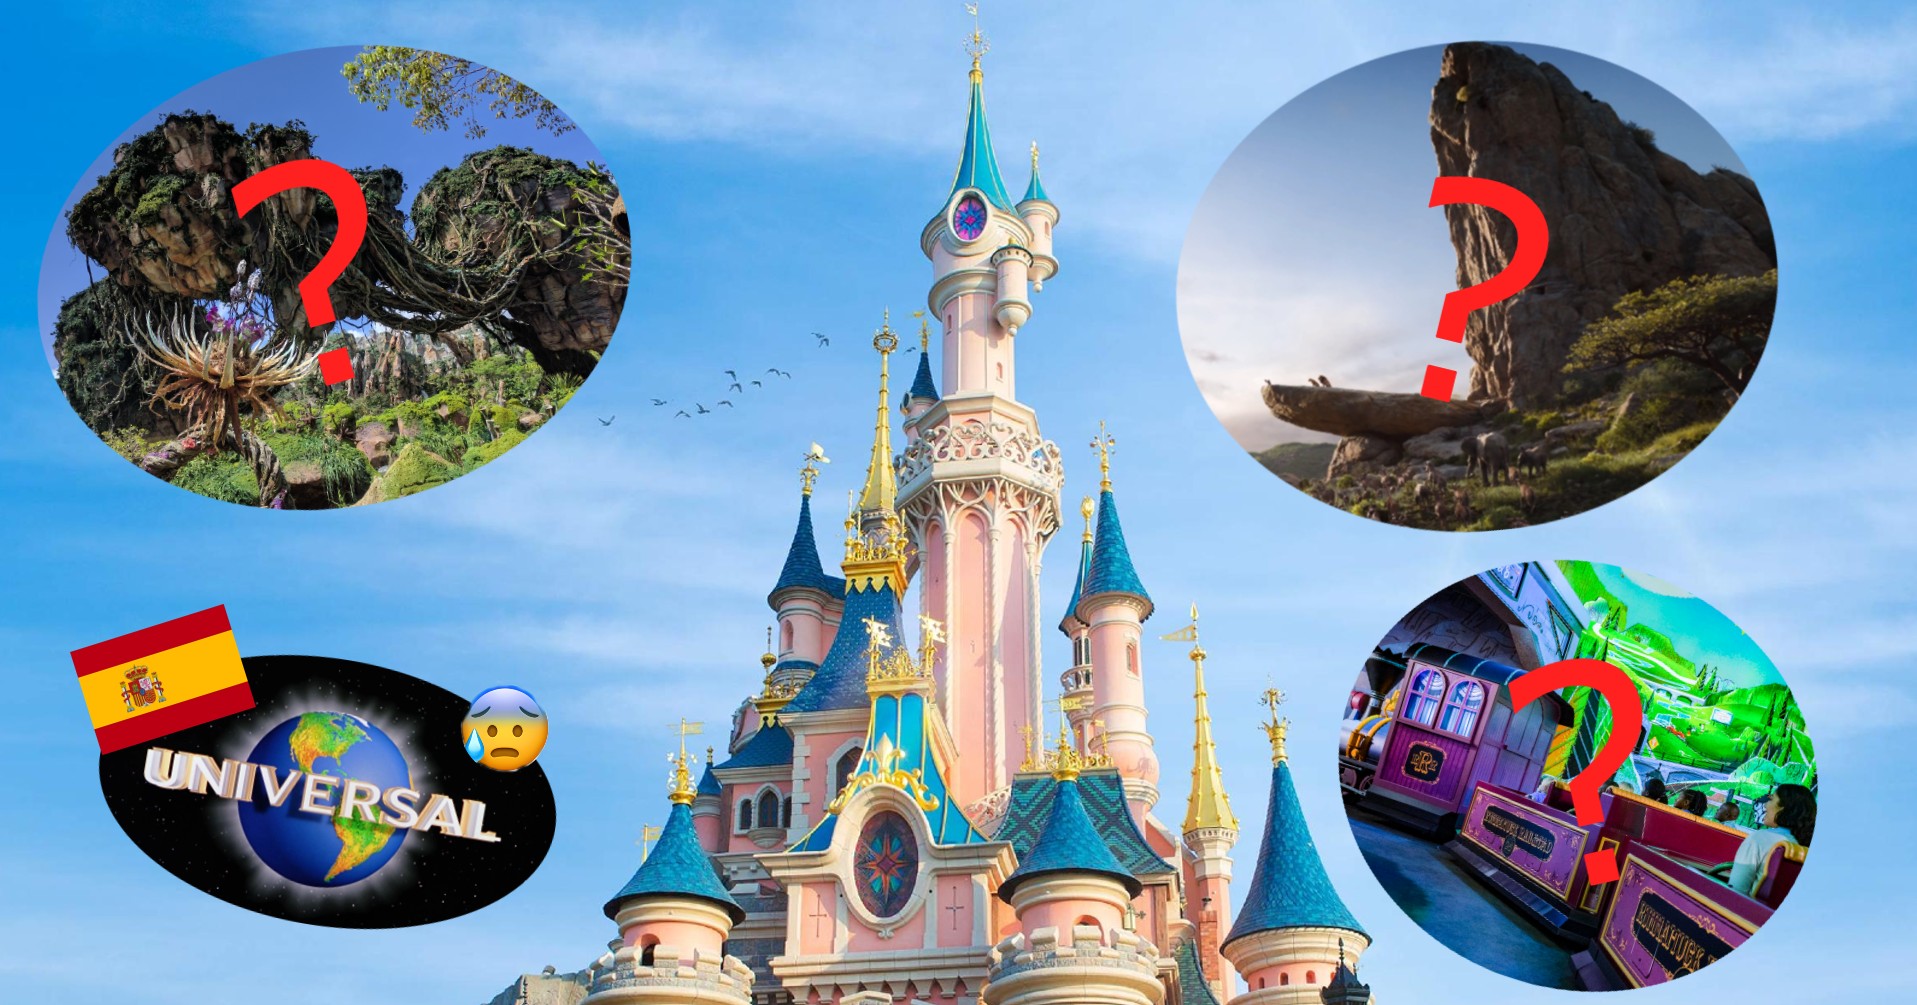 RUMOUR: Disney to Invest €15 Billion into Disneyland Paris